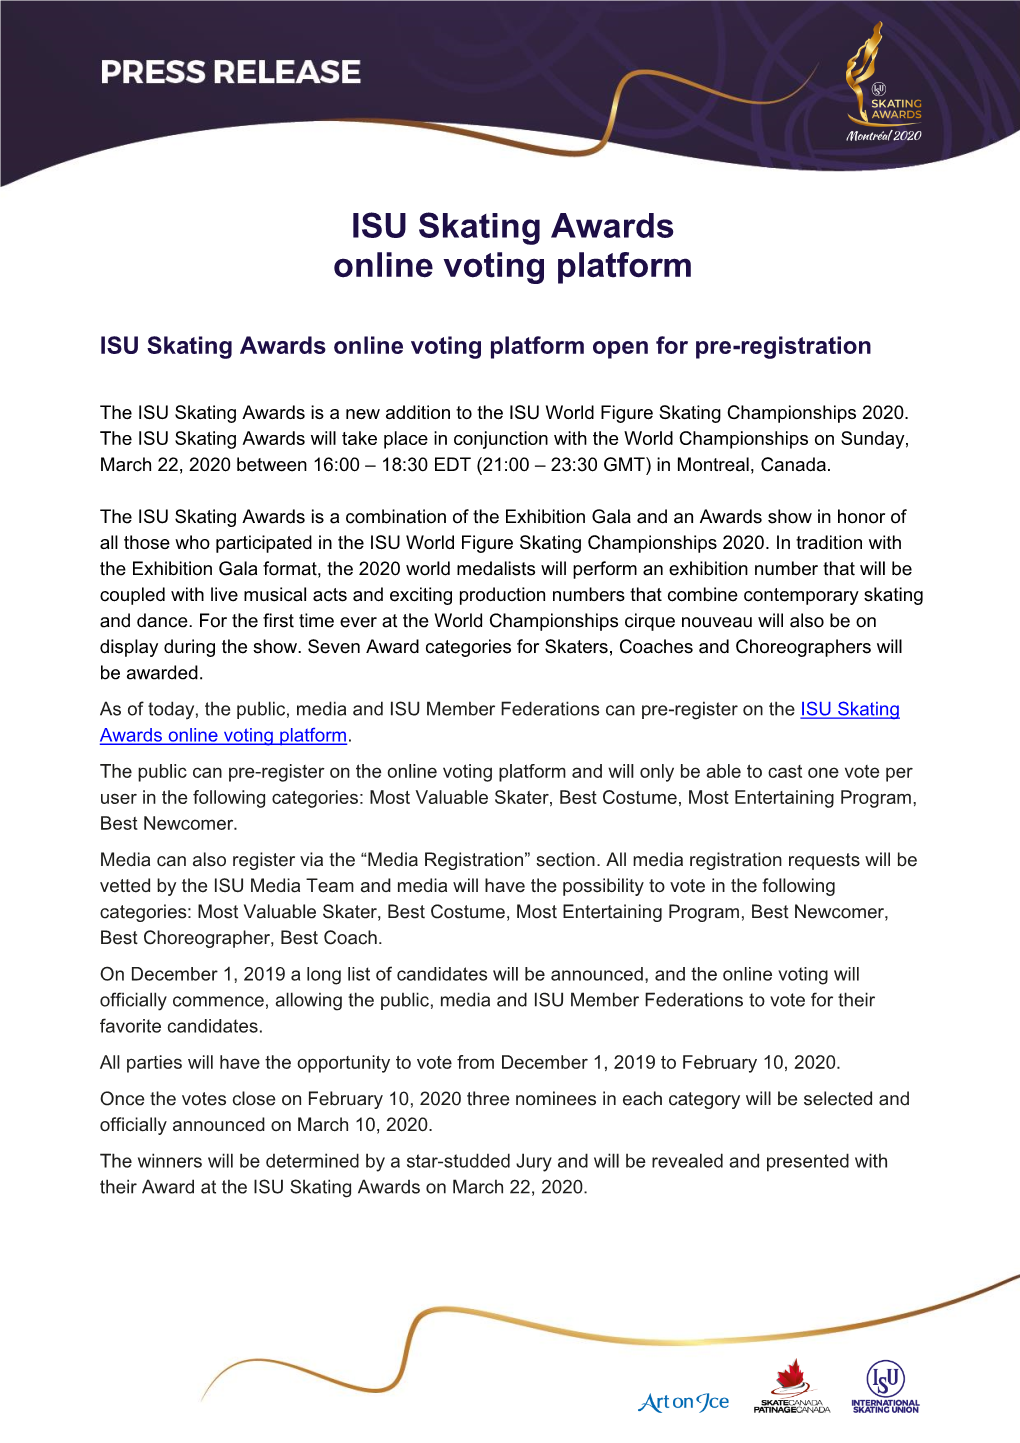 ISU Skating Awards Online Voting Platform